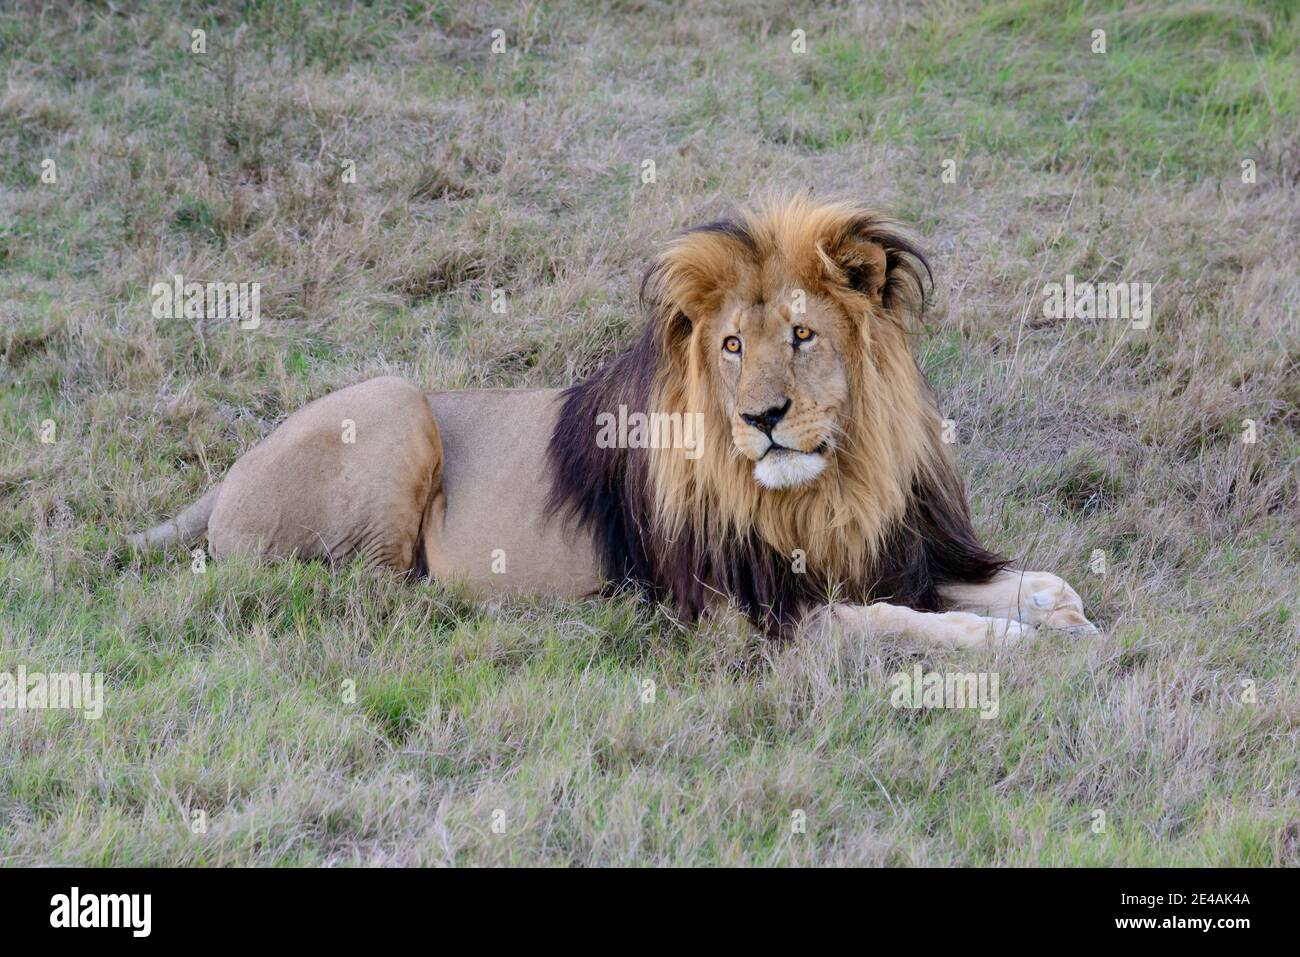 Cape lion (Panthera leo), male, Port Elizabeth, South Africa, Schotia Safaris Private Game Reserve park Stock Photo